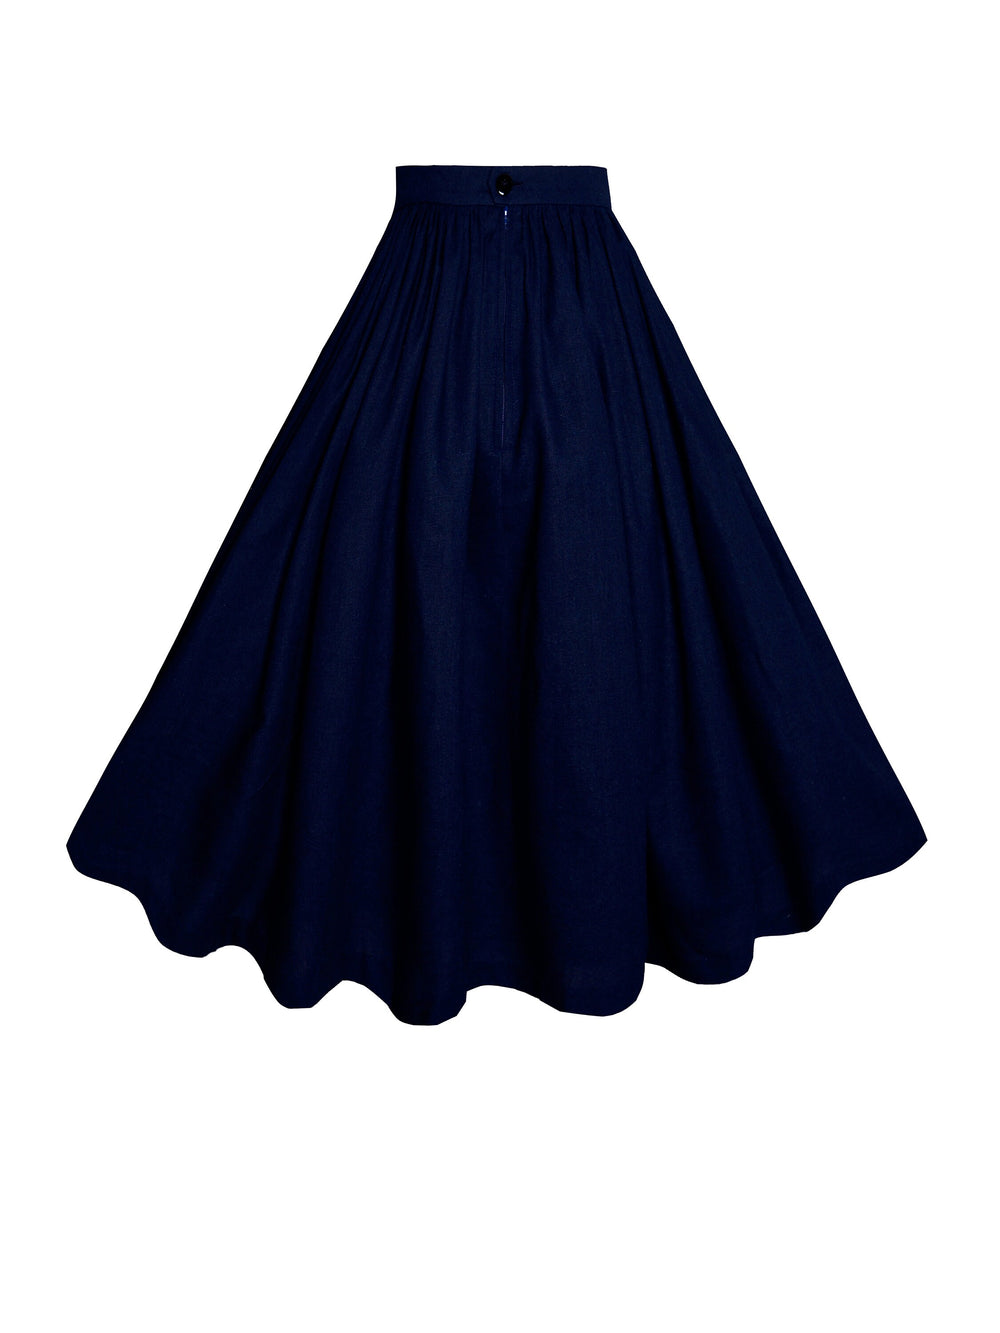 MTO - Lola Skirt in Indigo Blue Linen